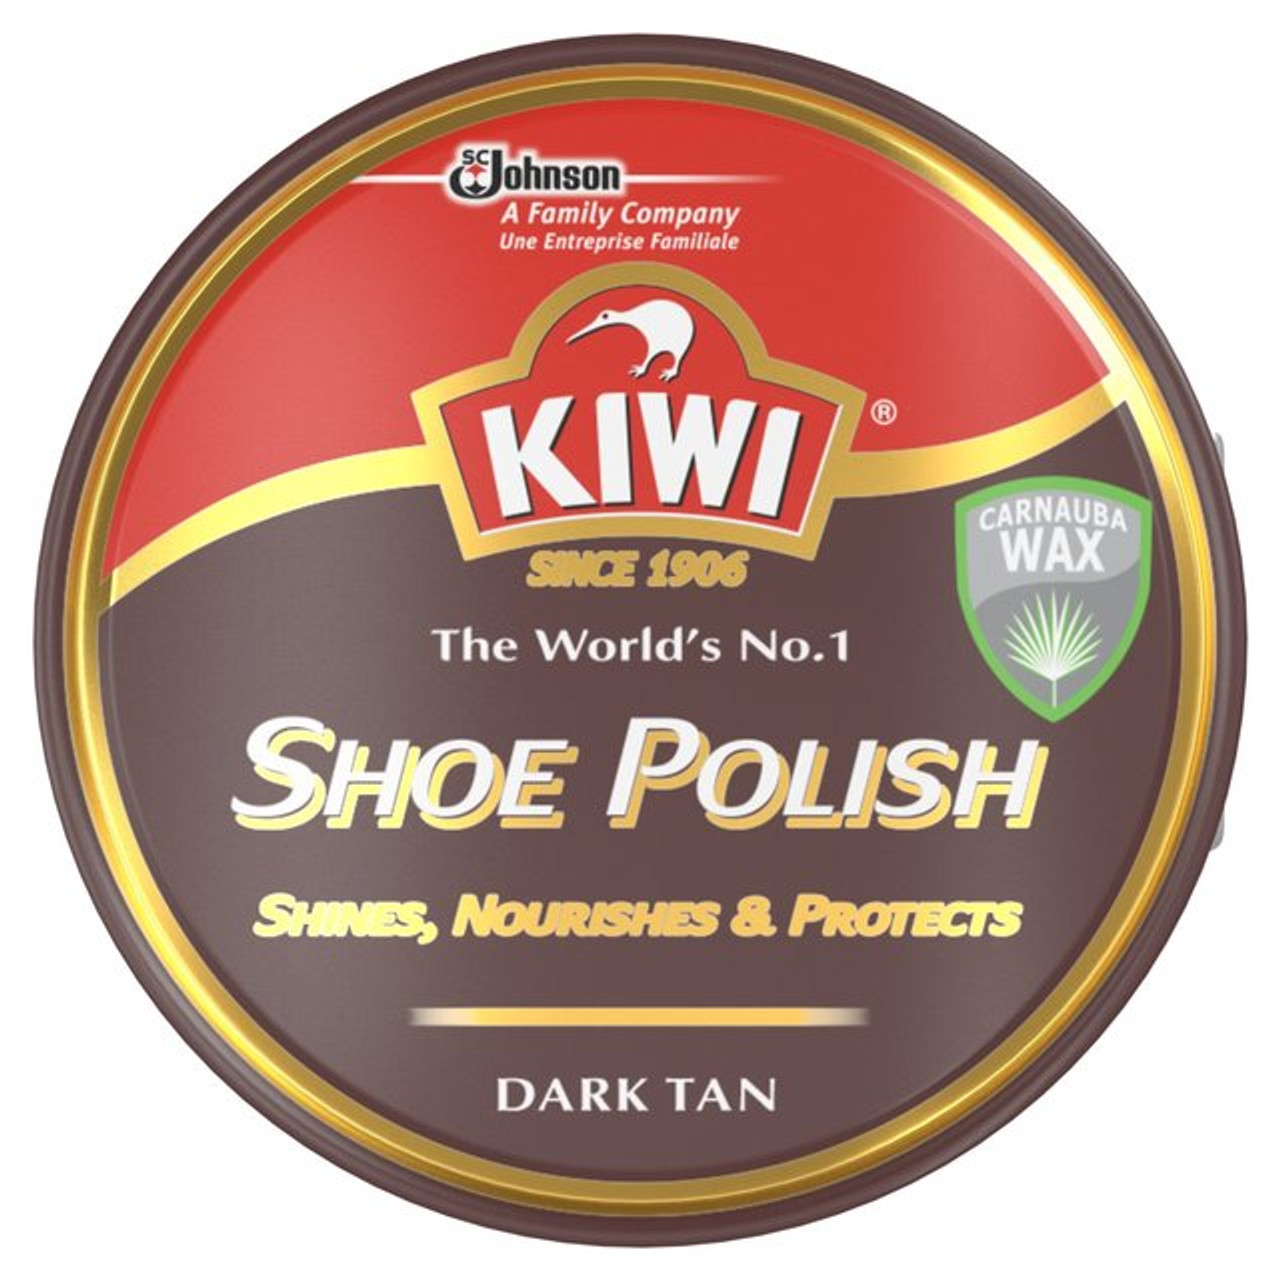 kiwi dark tan shoe polish